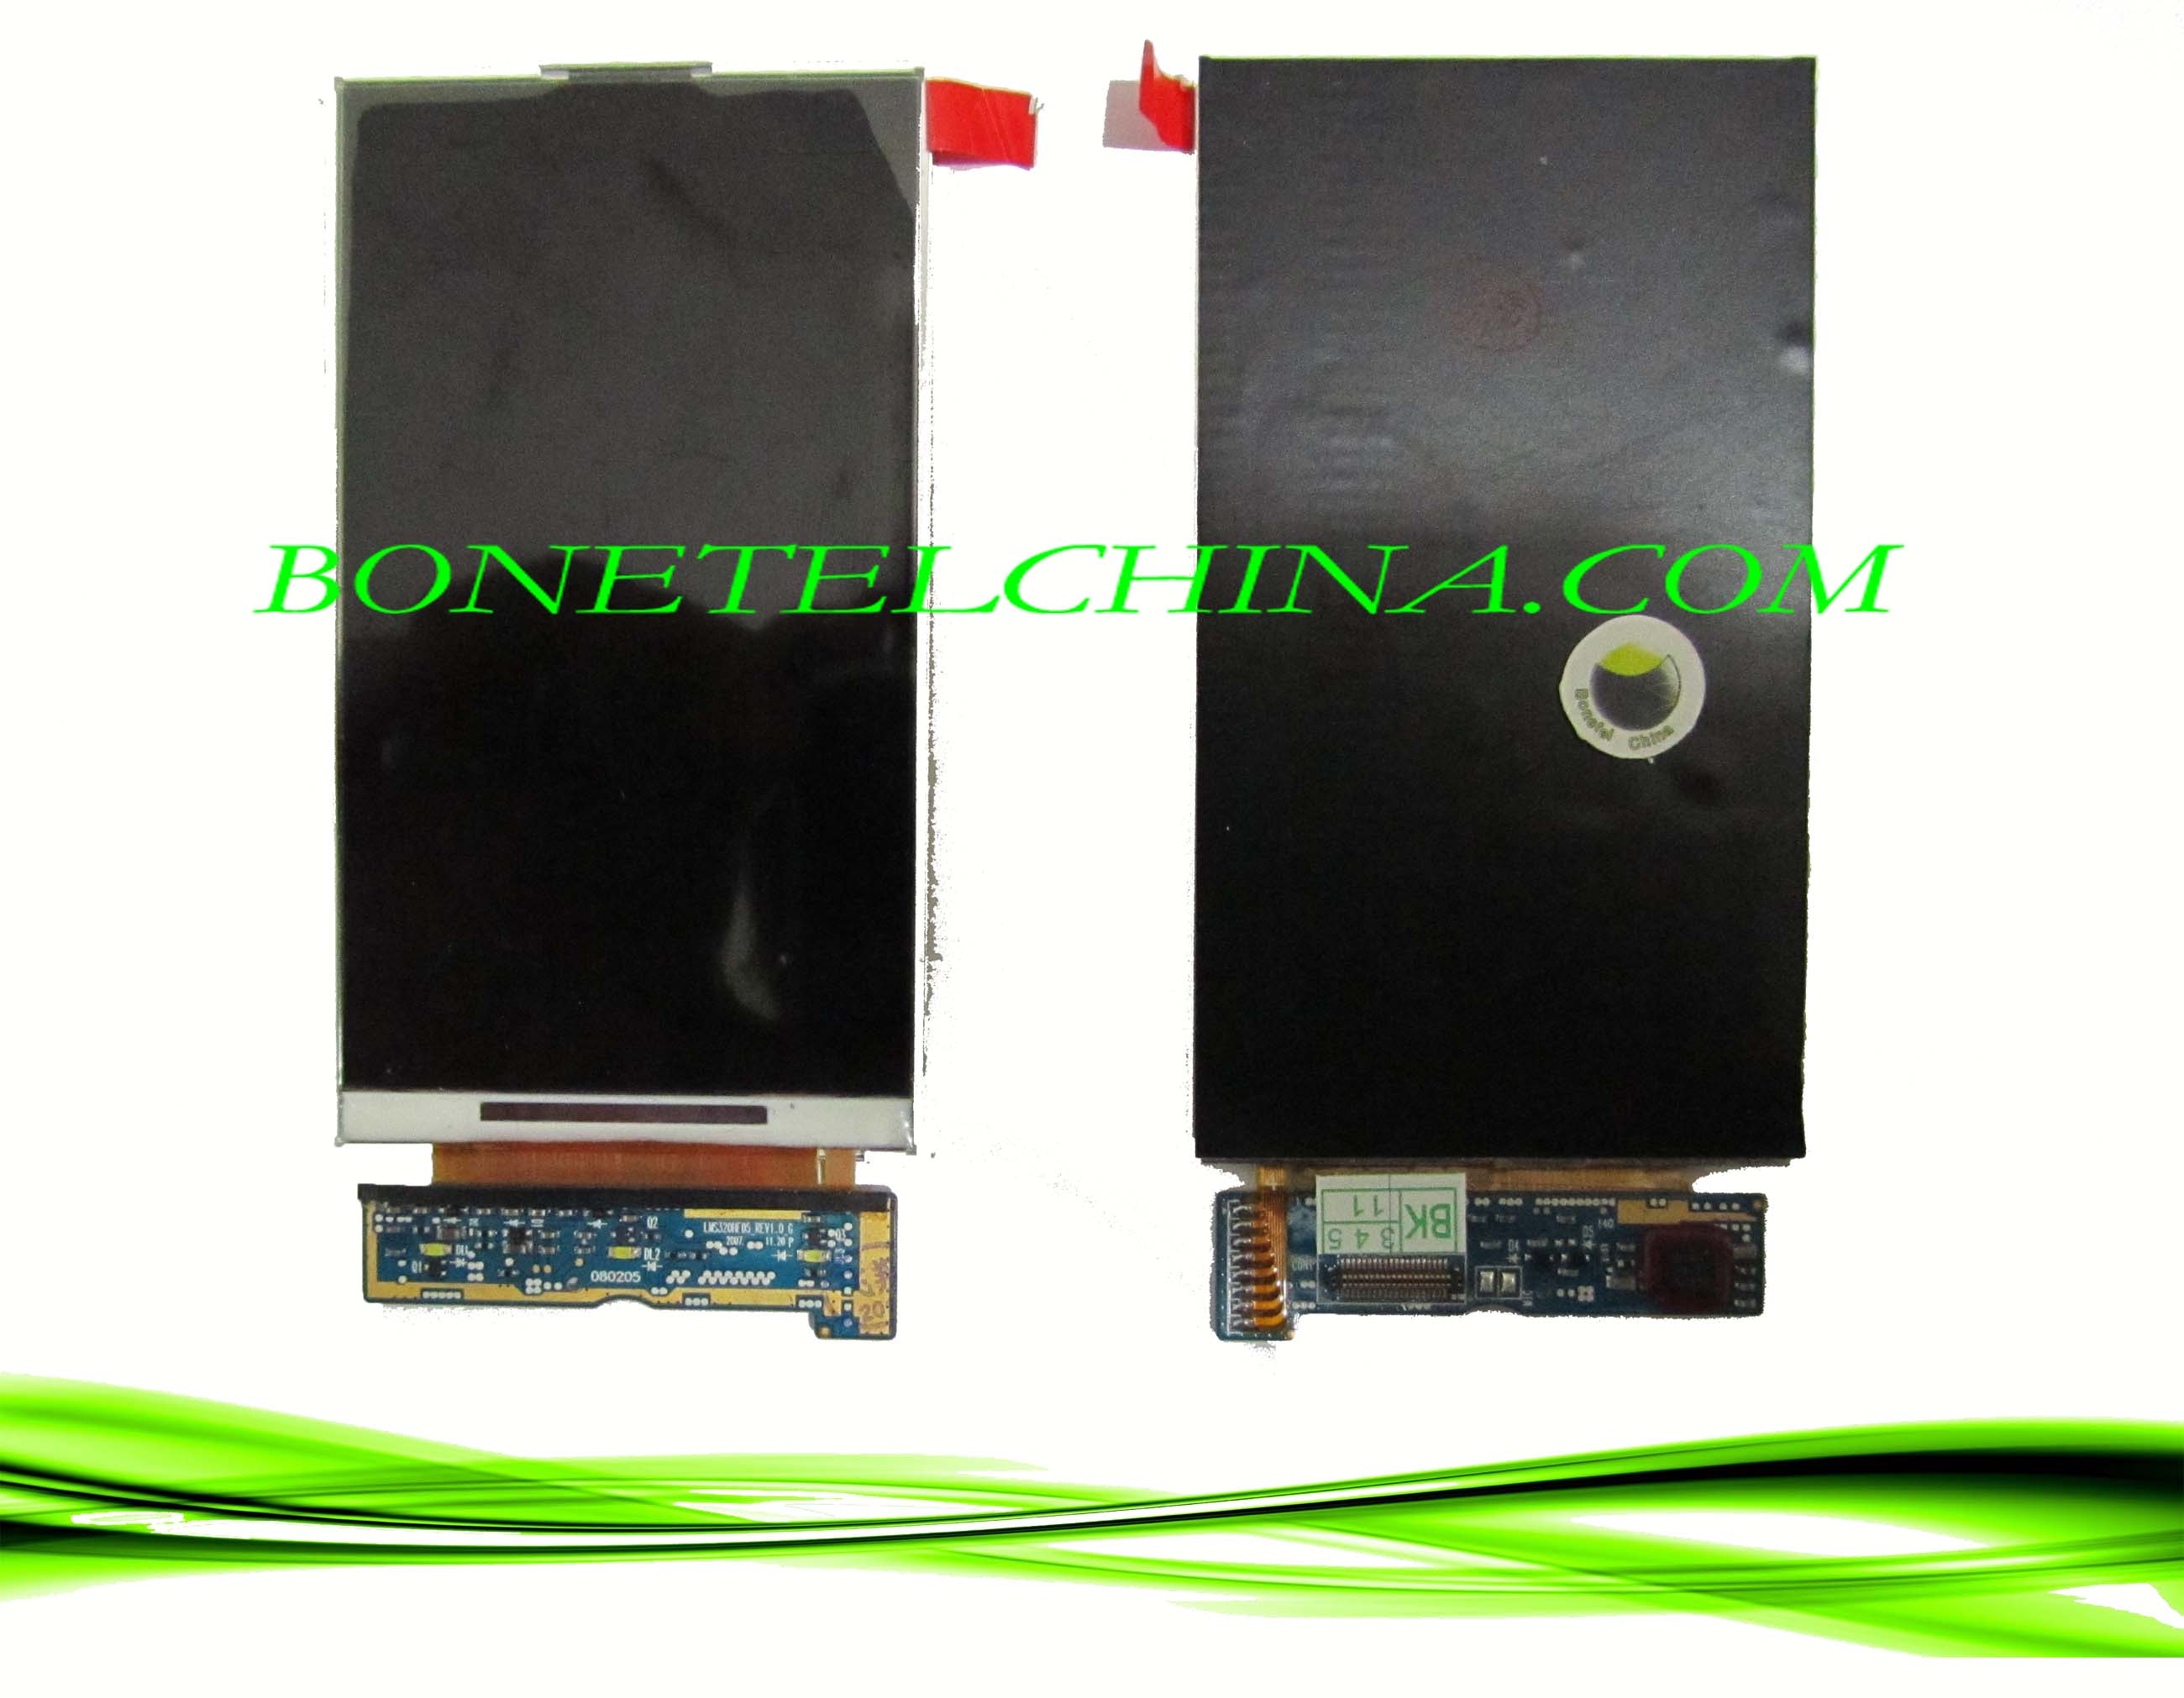 Teléfono Móvil / Celular pantalla LCD para Samsung F490 (BON -LCD- F490 )